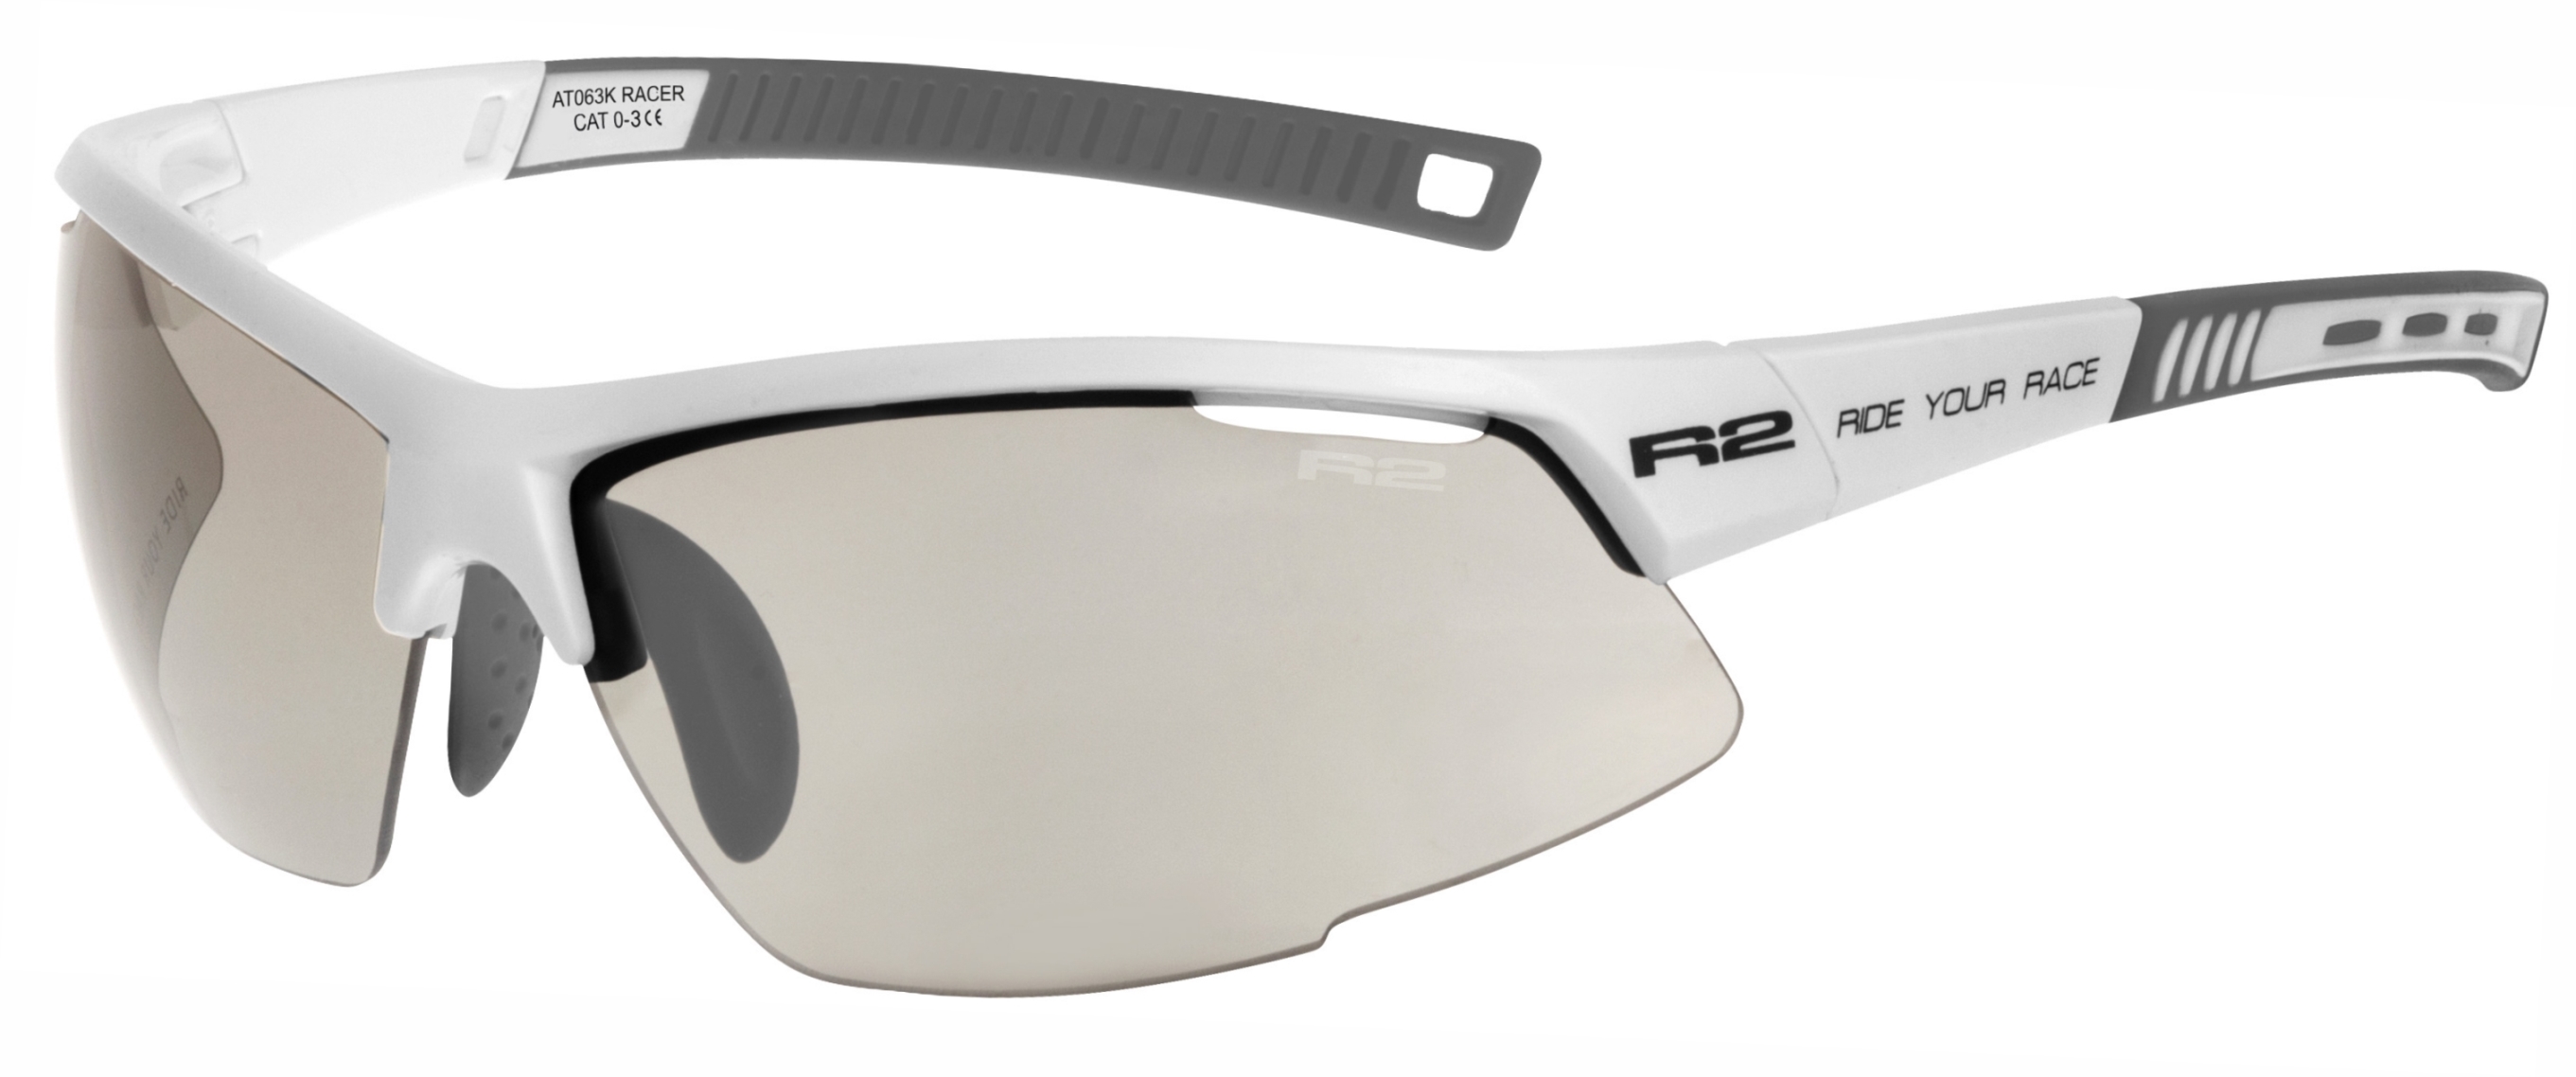 Photochromatic sunglasses R2 RACER AT063K standard